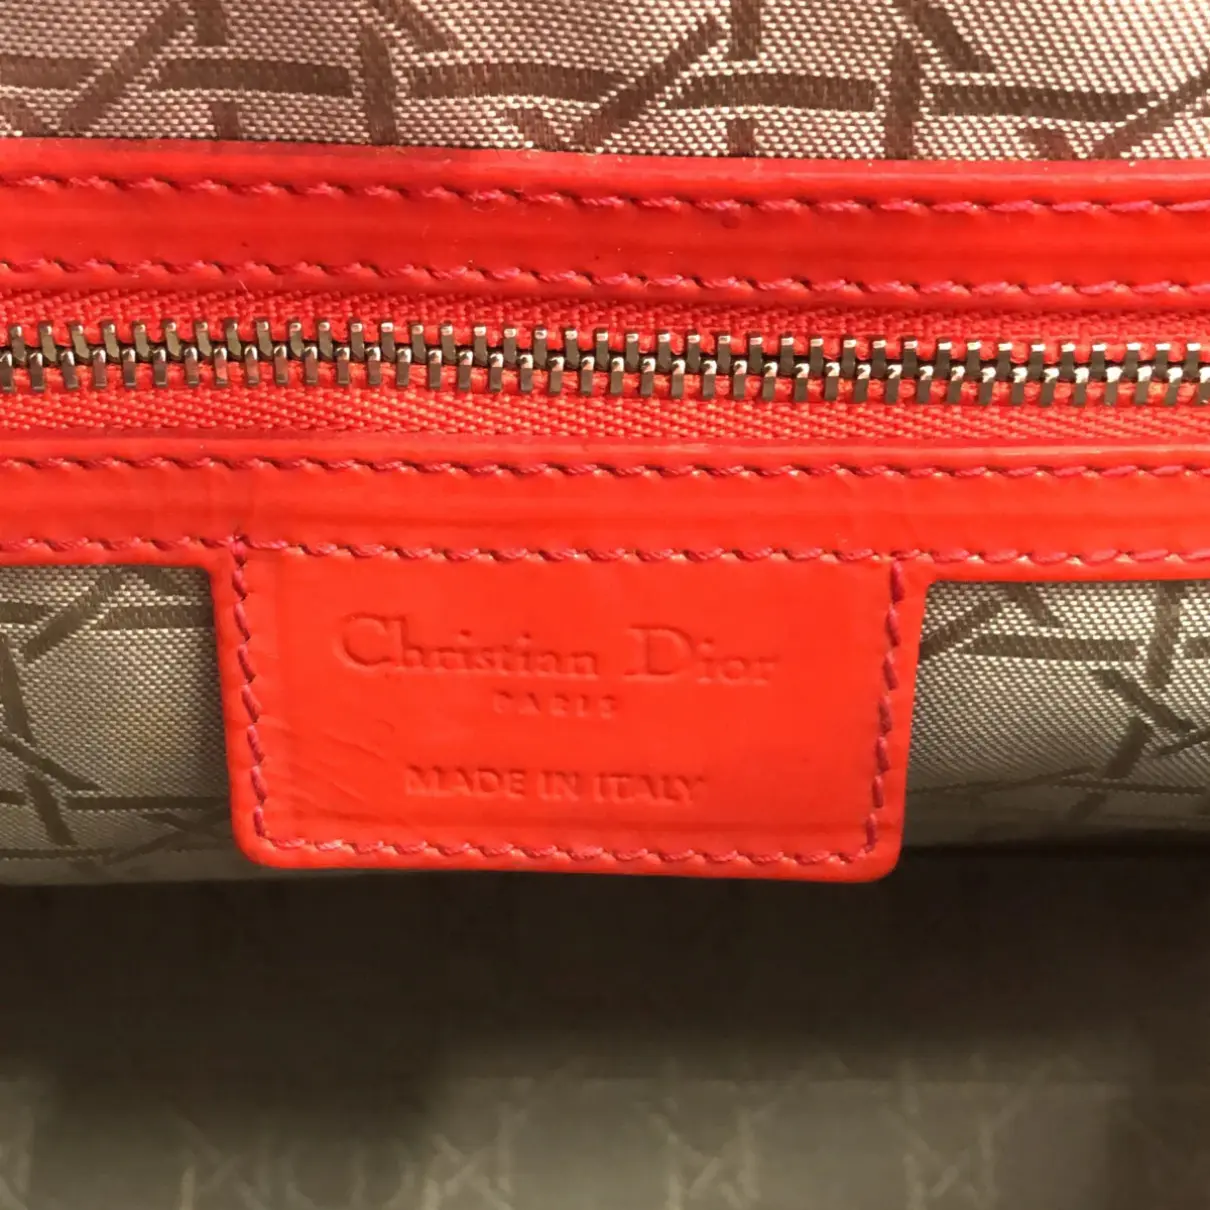 Patent leather handbag Christian Dior